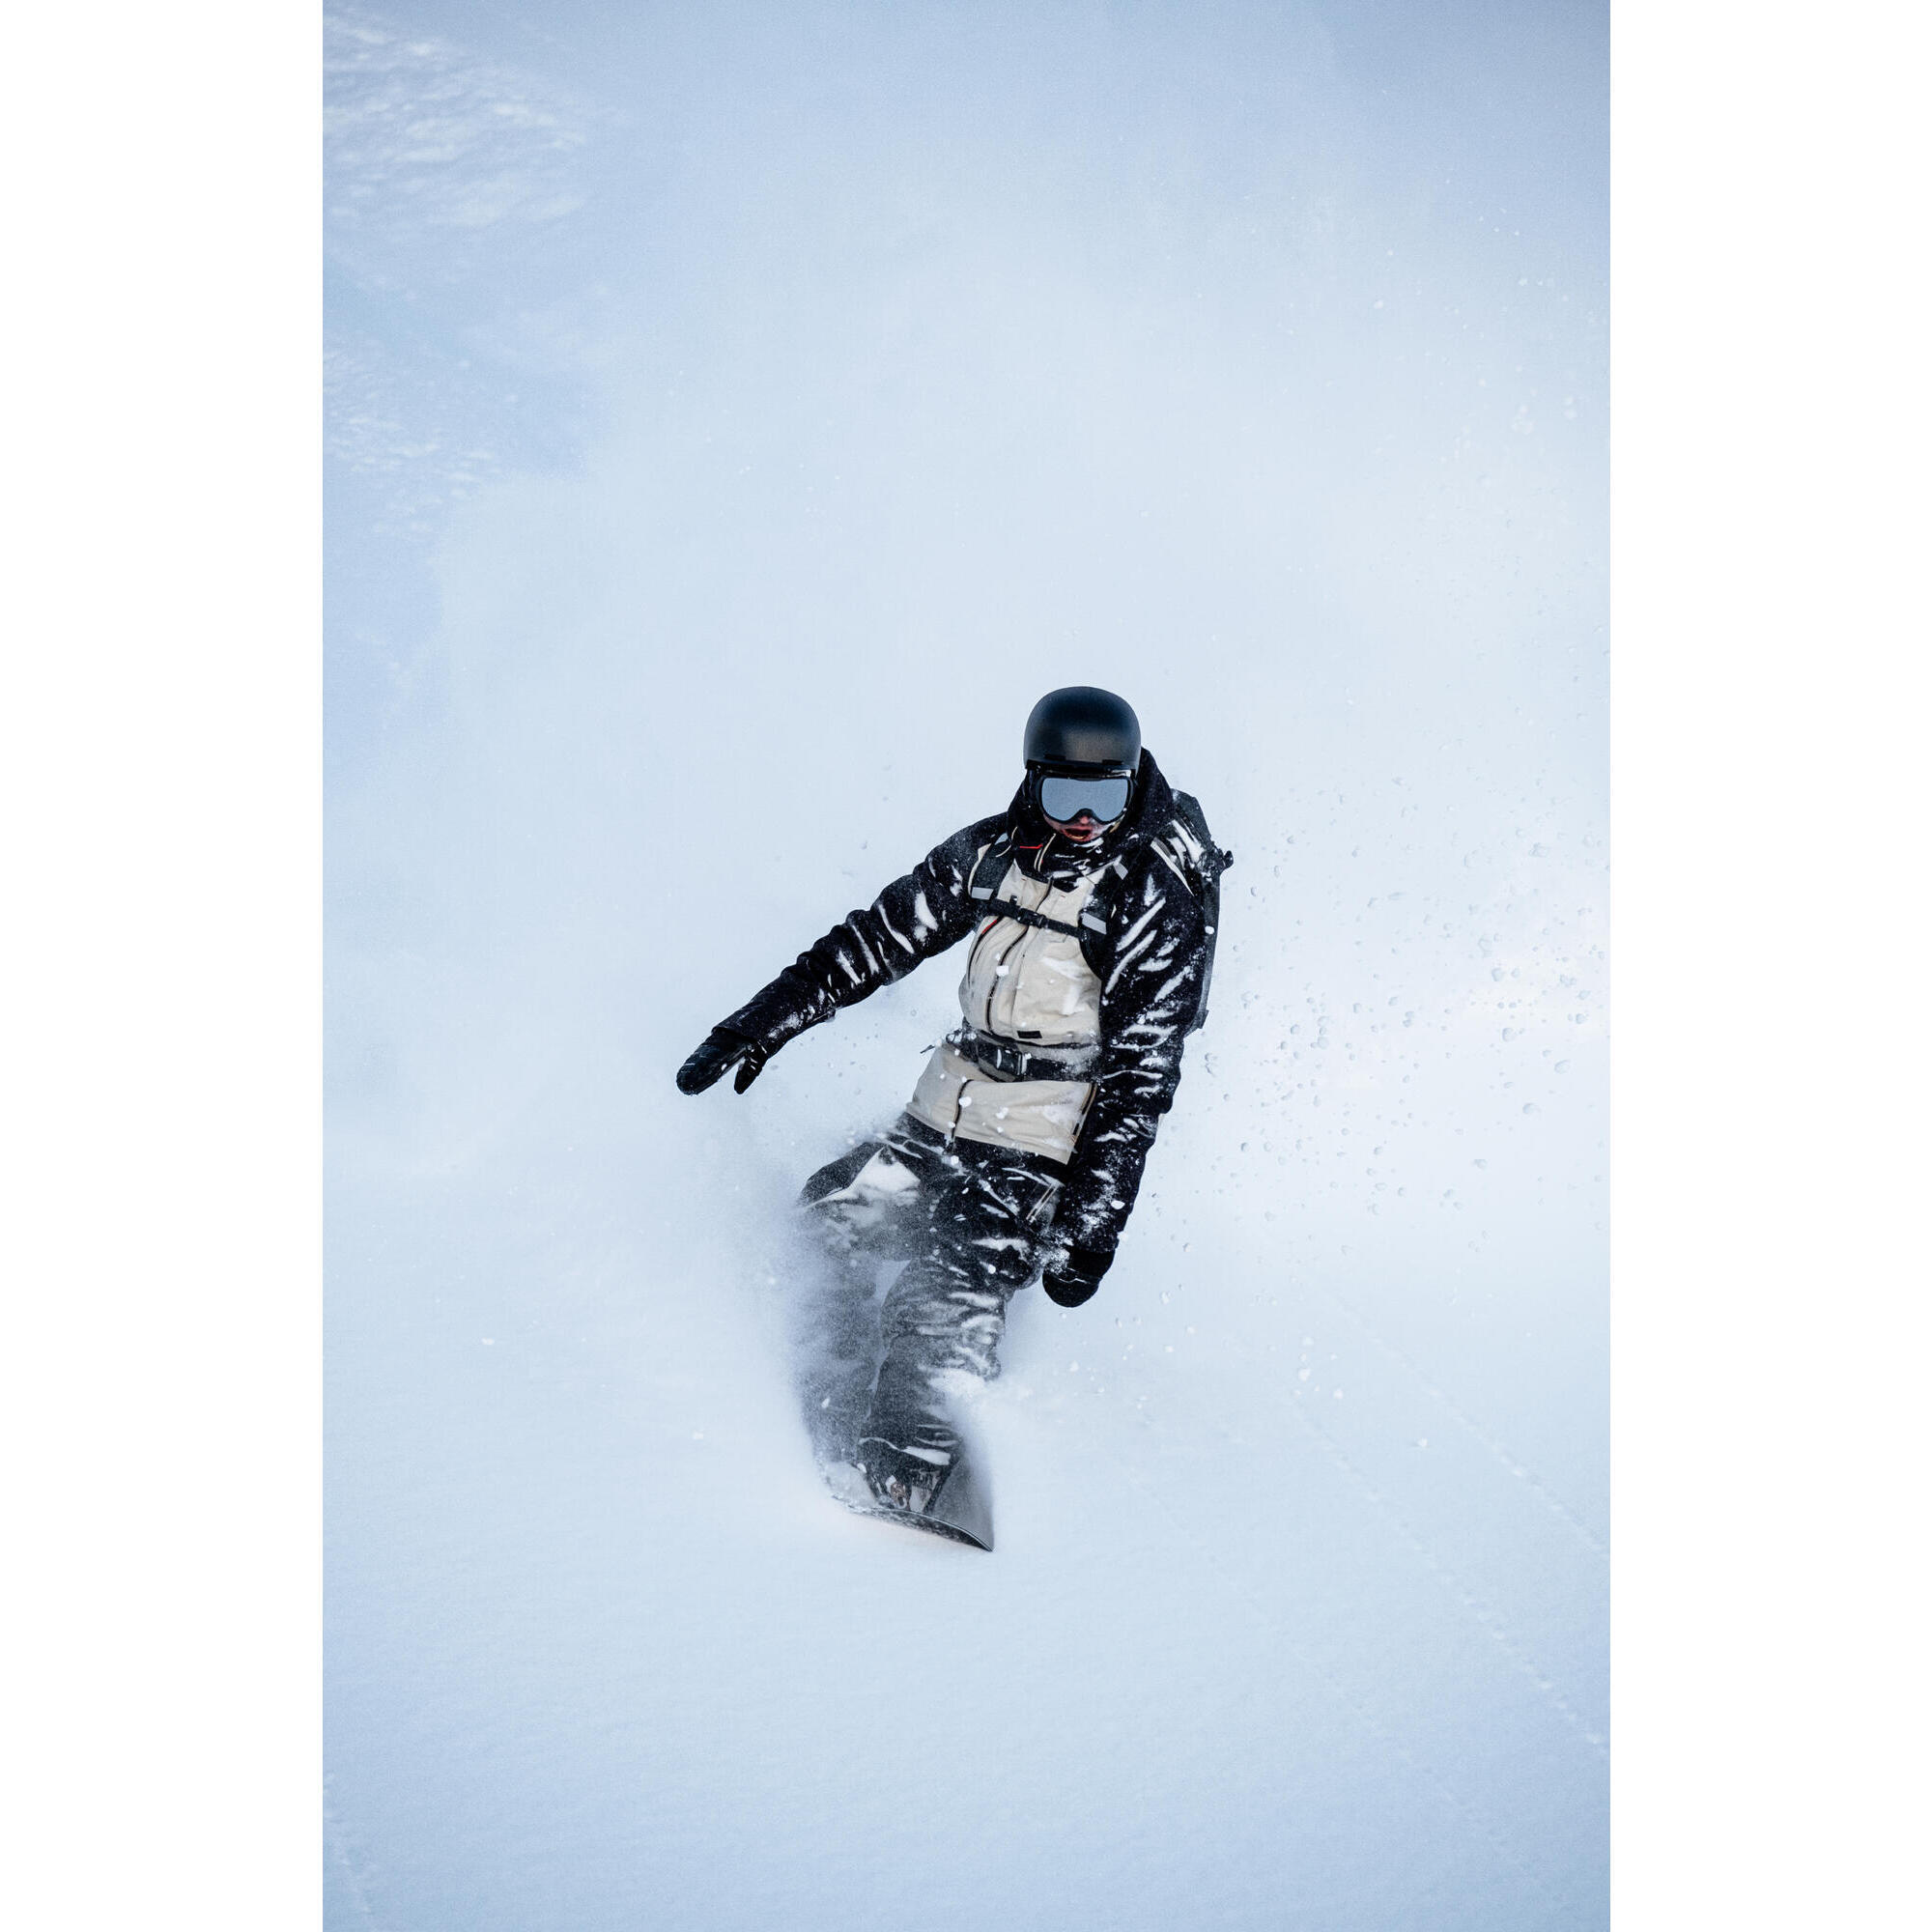 Men's Winter Bib Pants – SNB 900 Black - Black, Sand - Dreamscape -  Decathlon